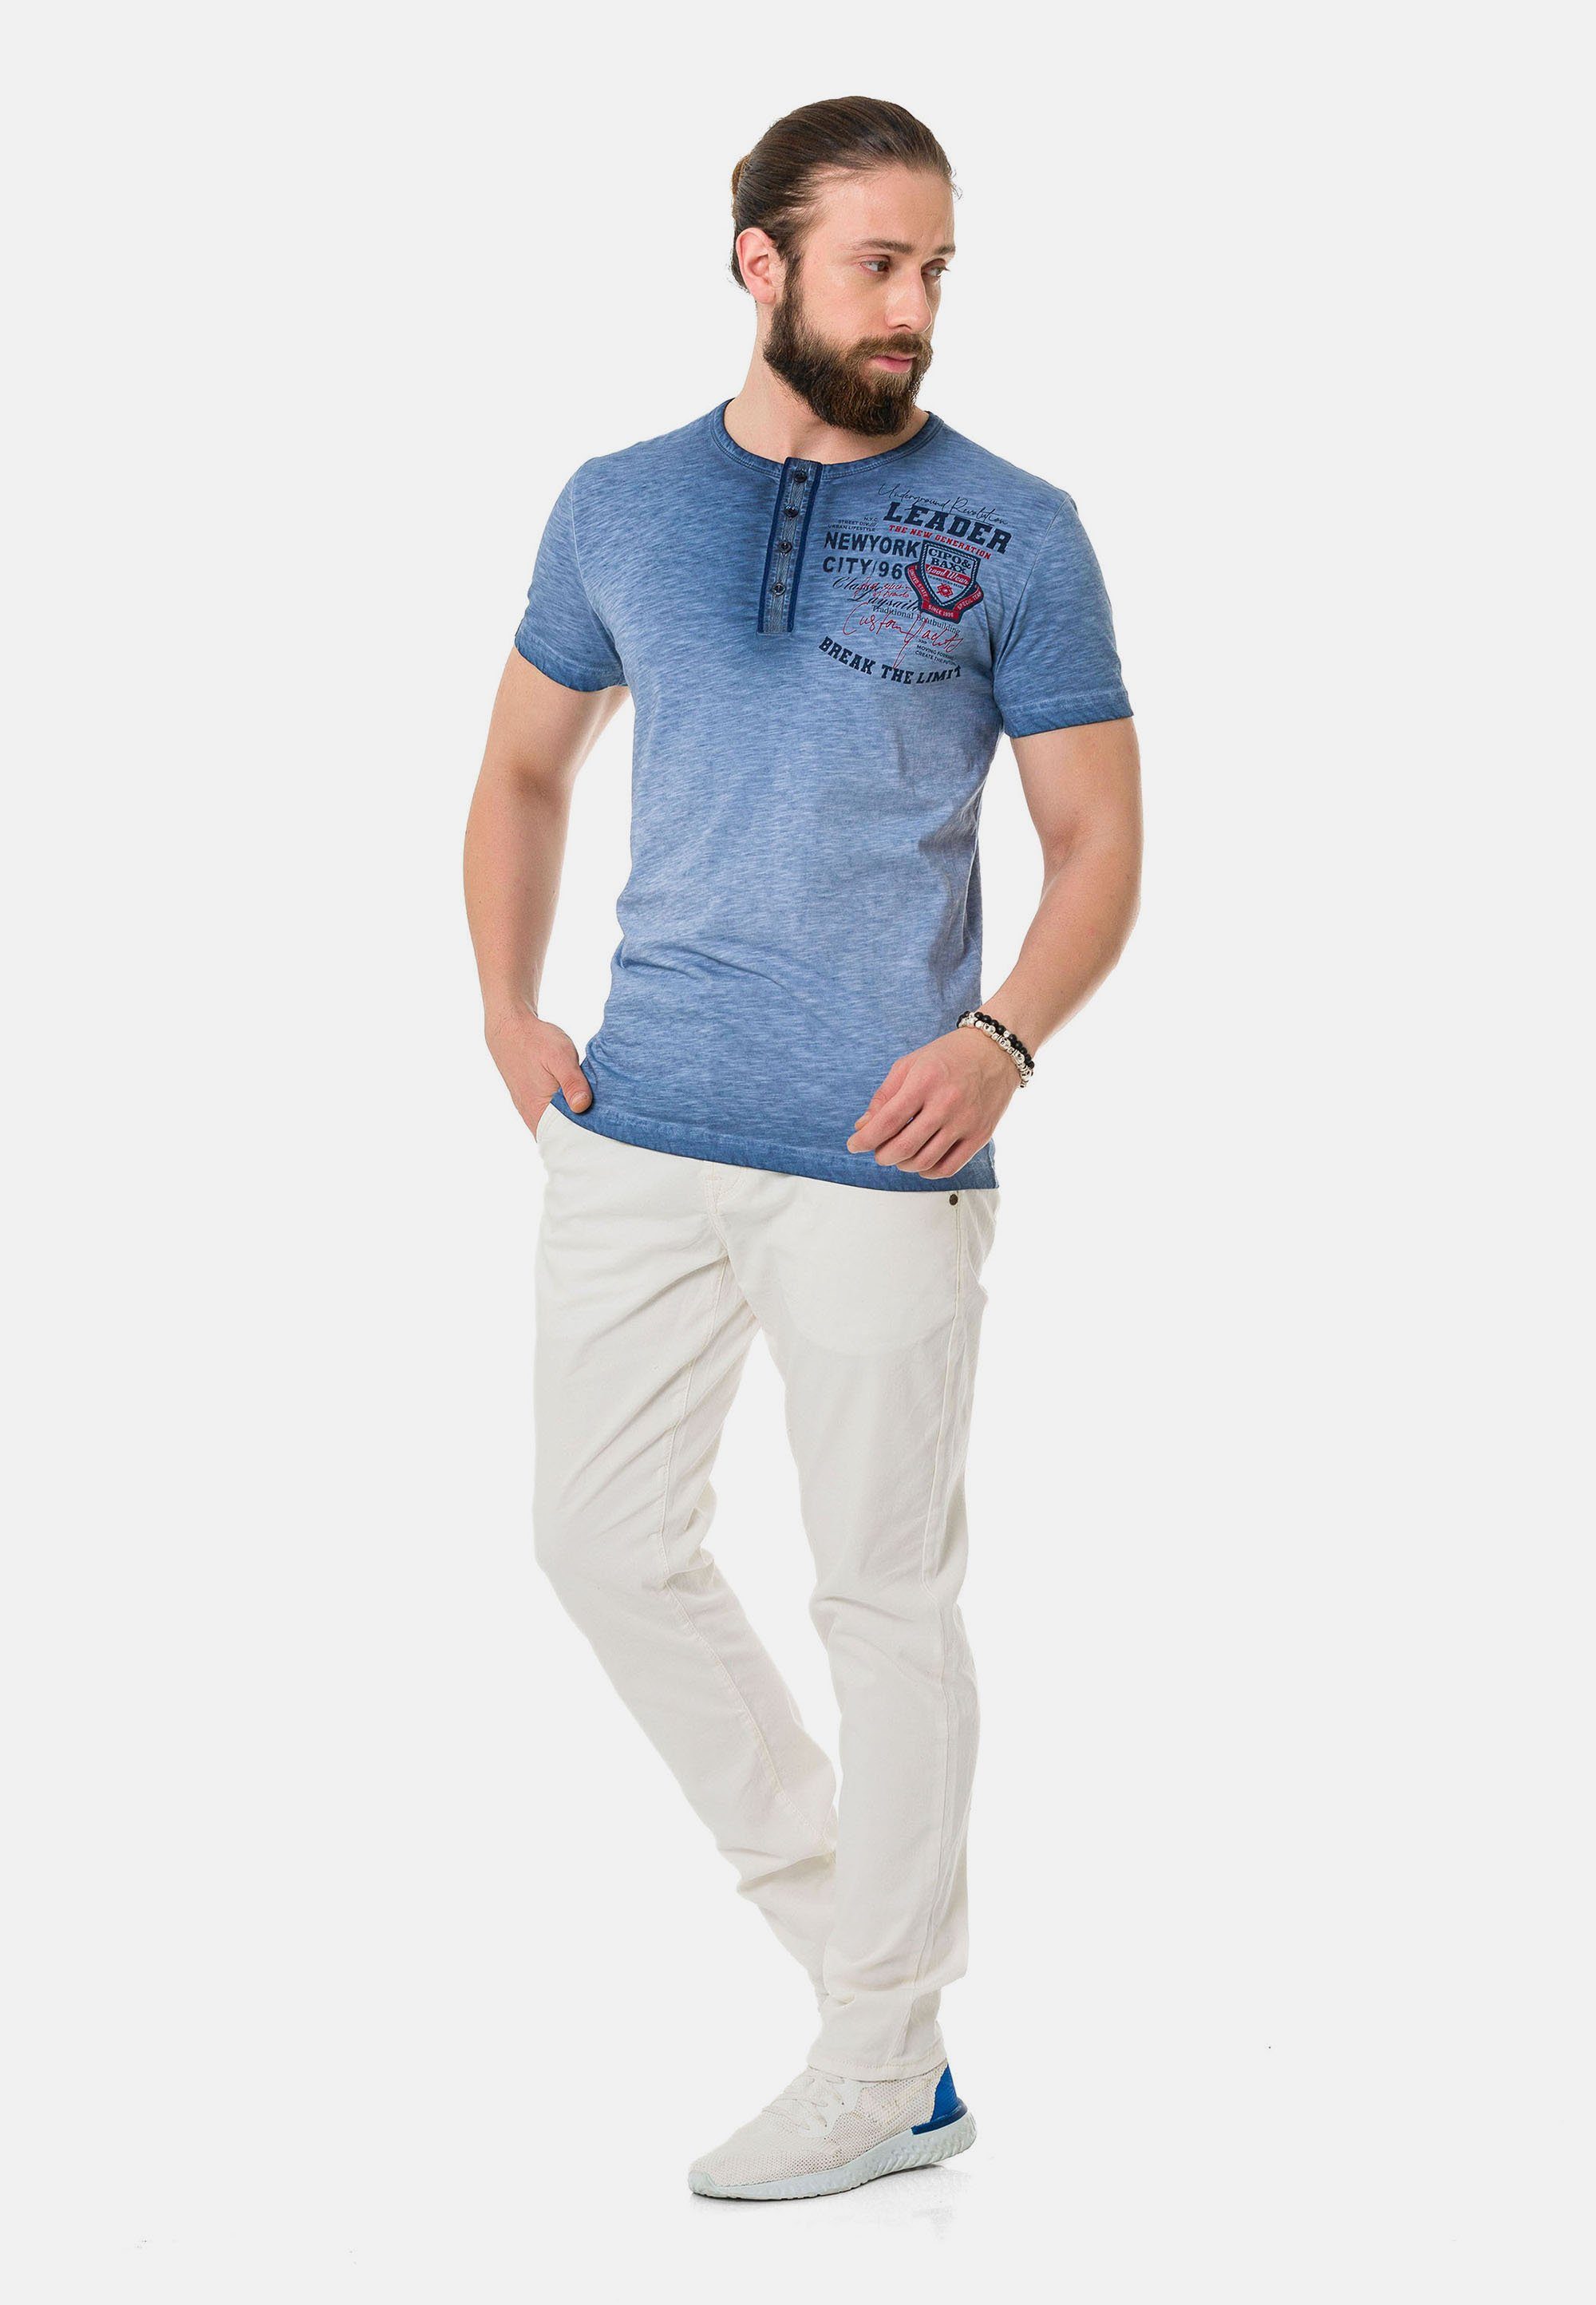 Baxx T-Shirt Look in blau & Cipo coolem